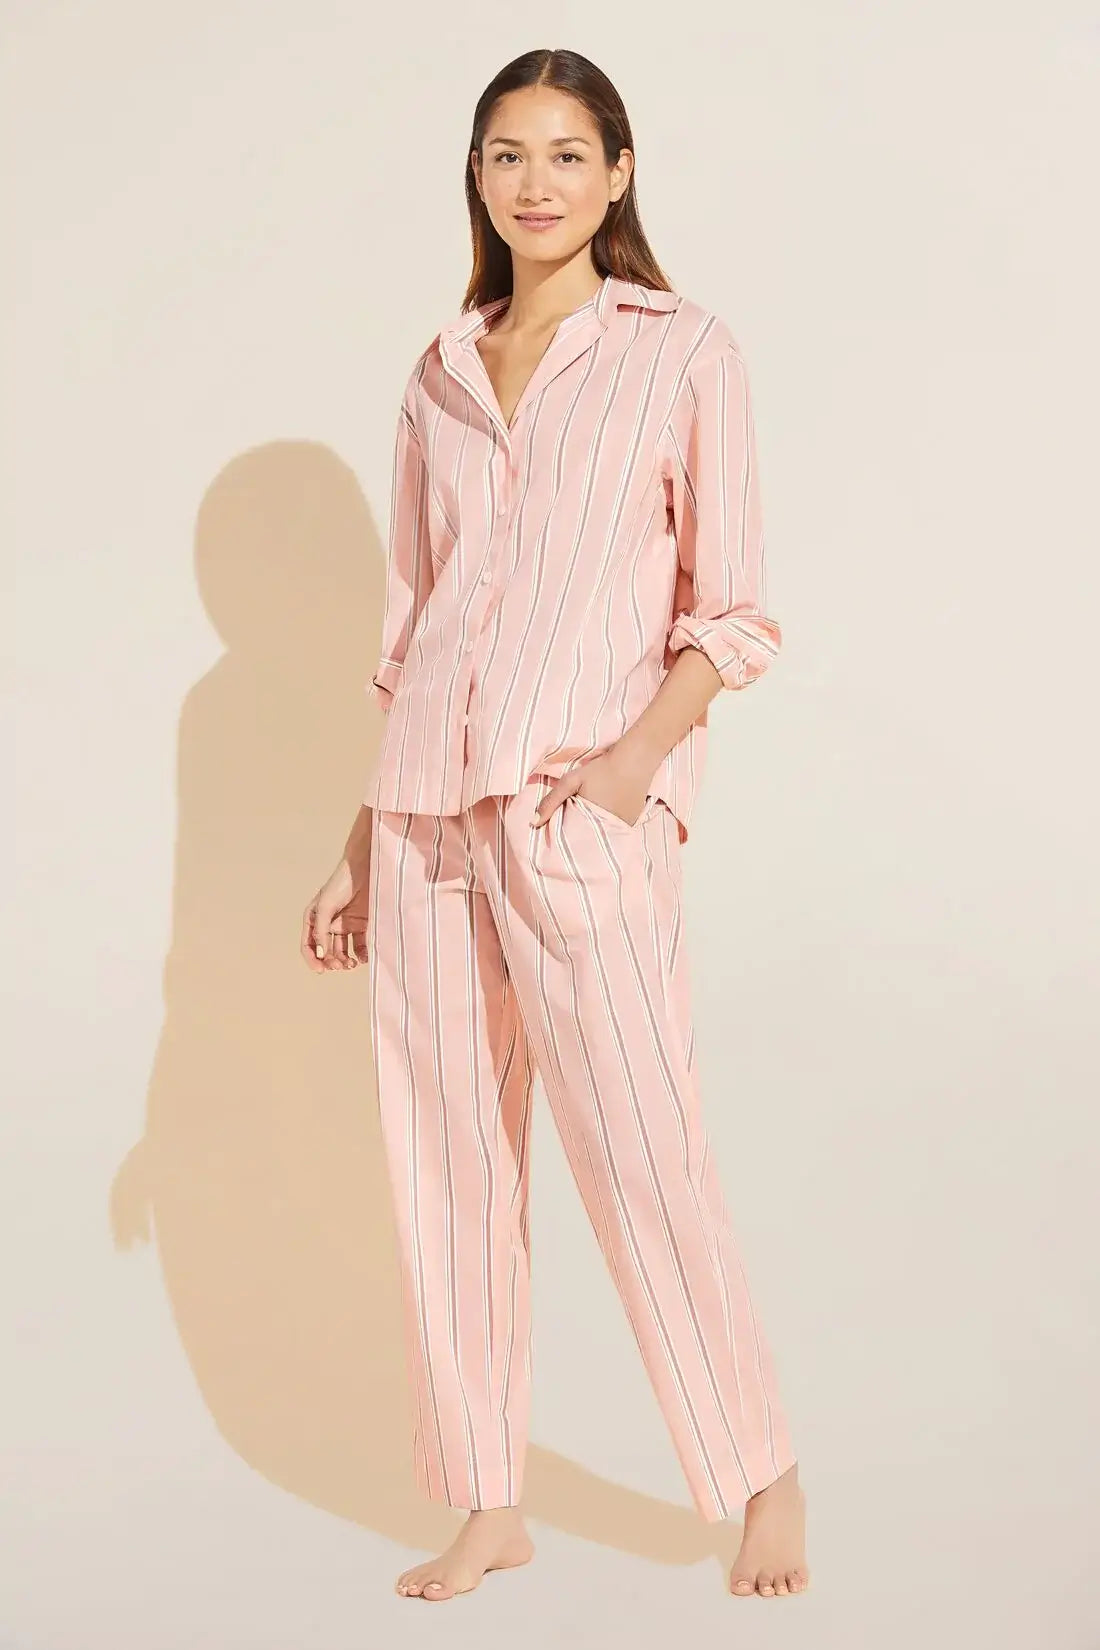 Ensemble Pyjama Lutin – Peignoir Avenue